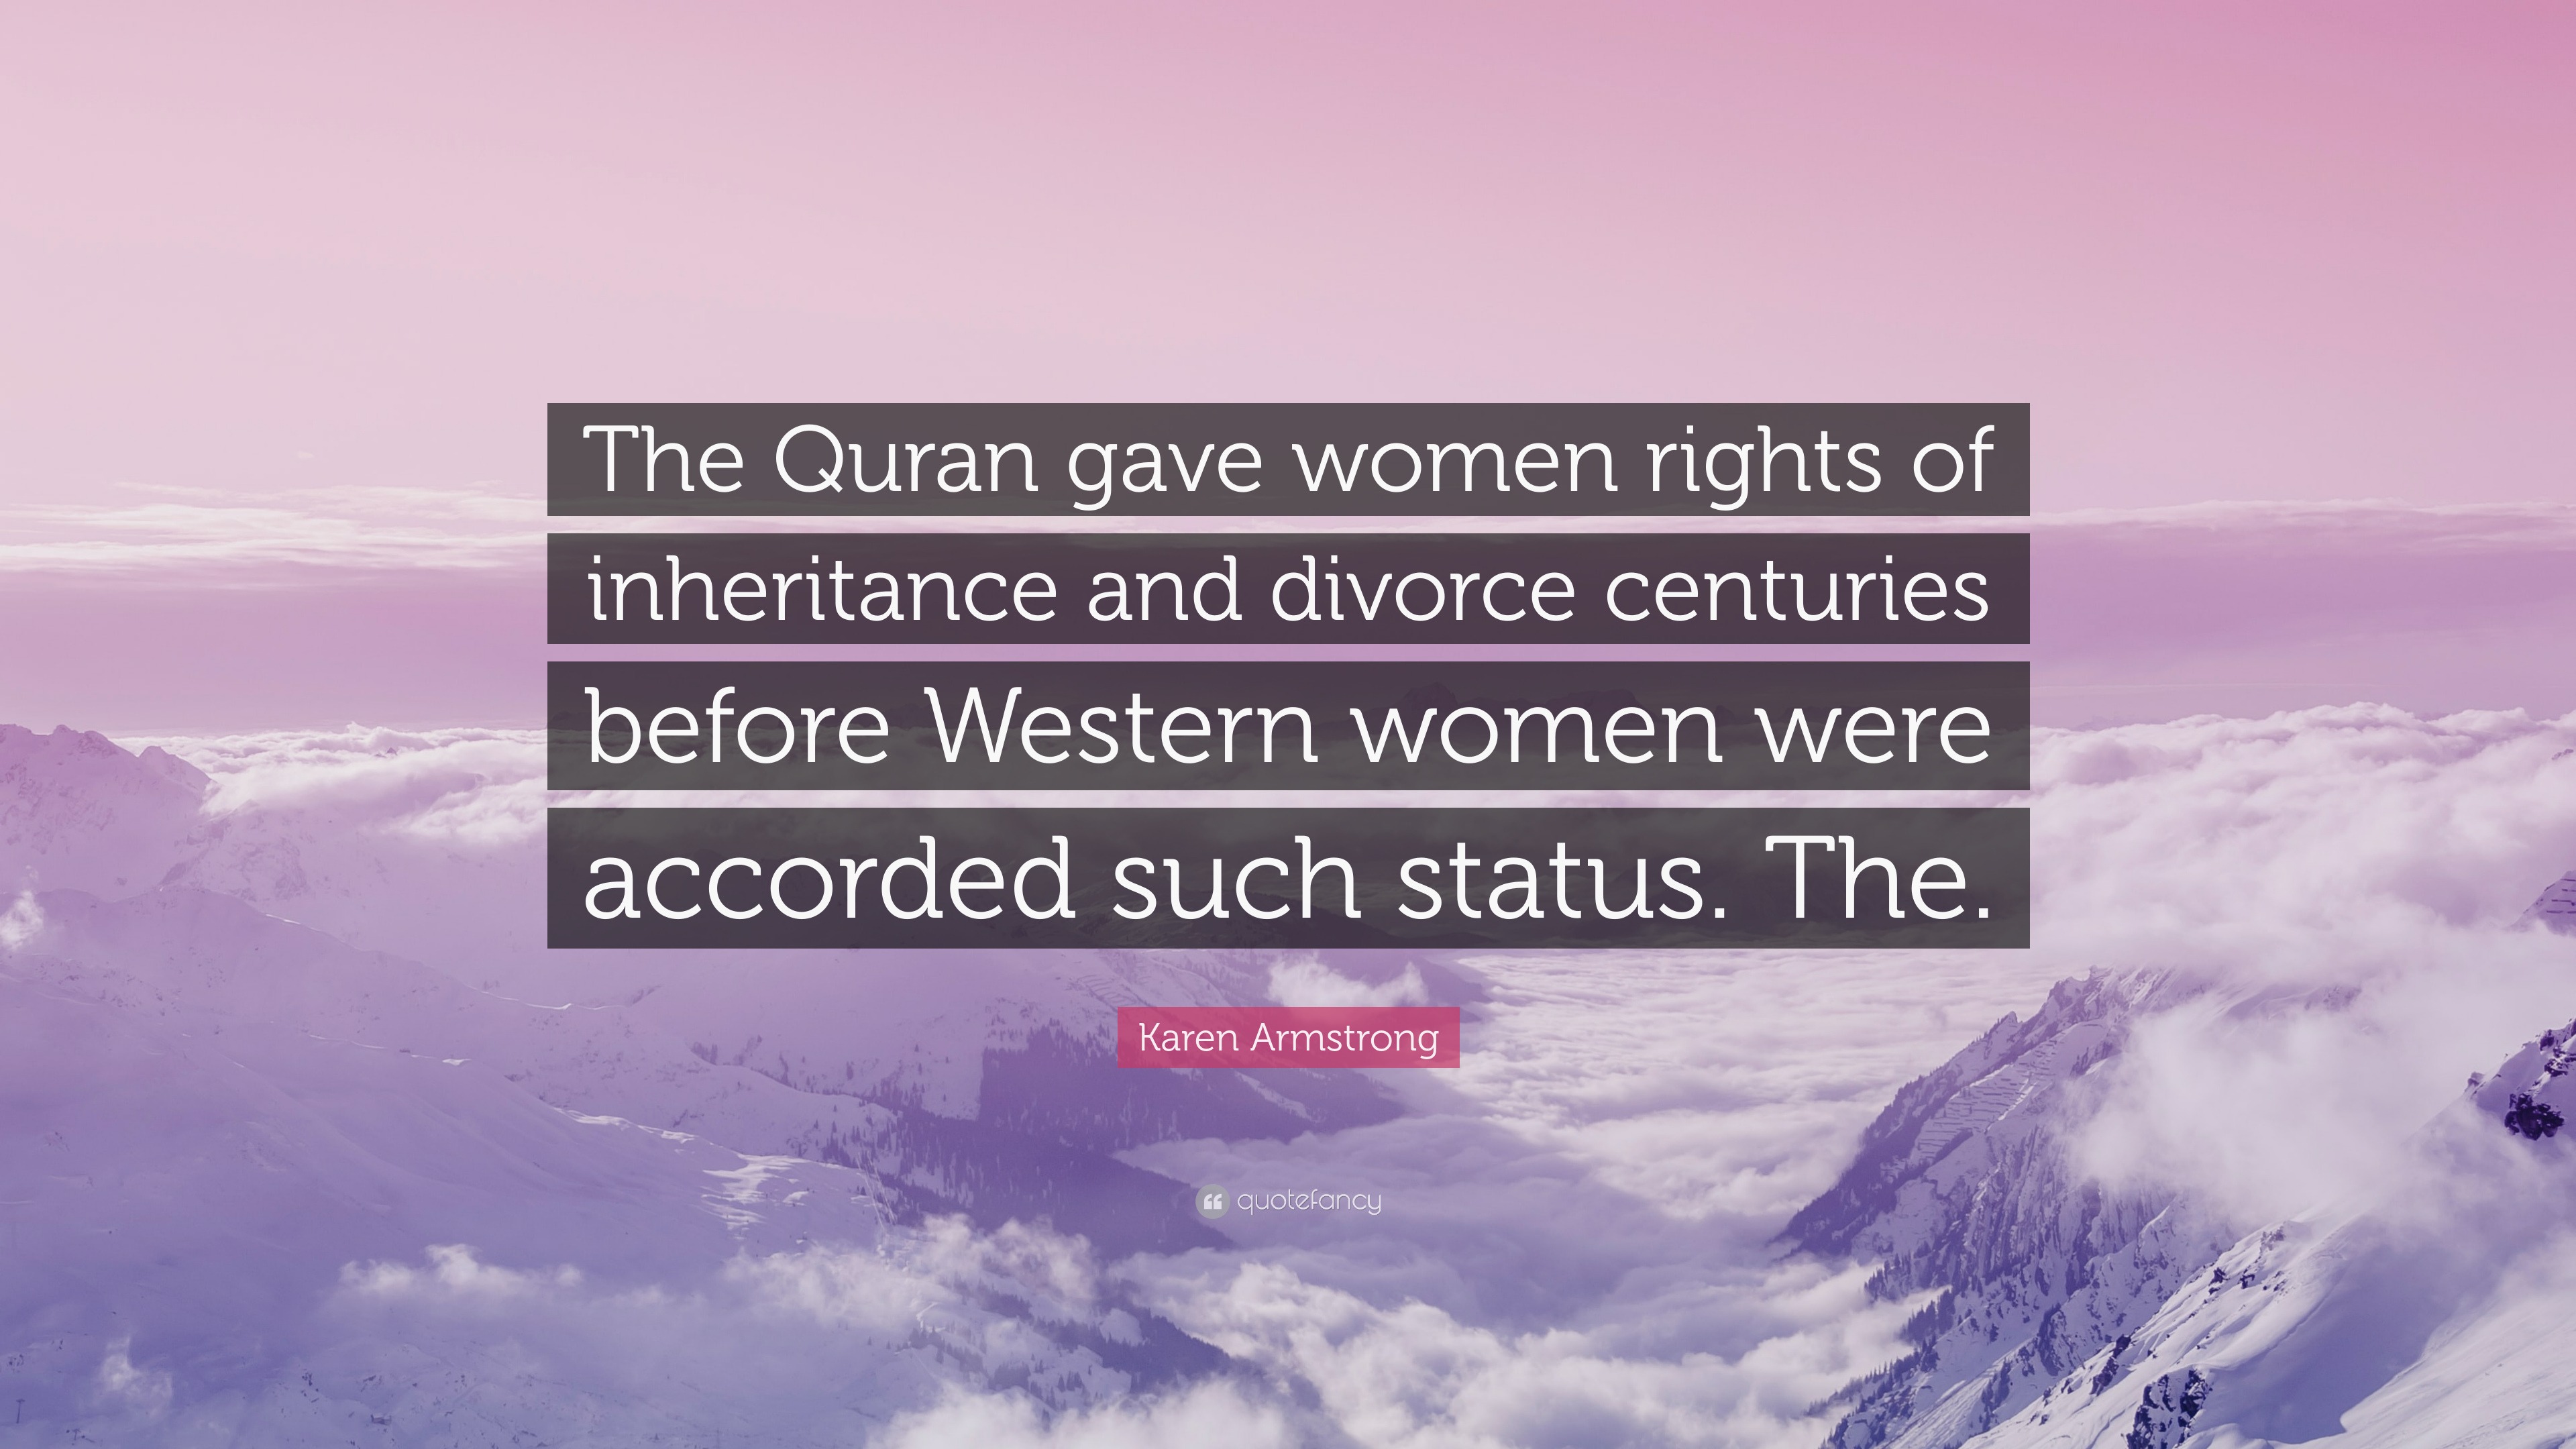 womens inheritance rights in islam